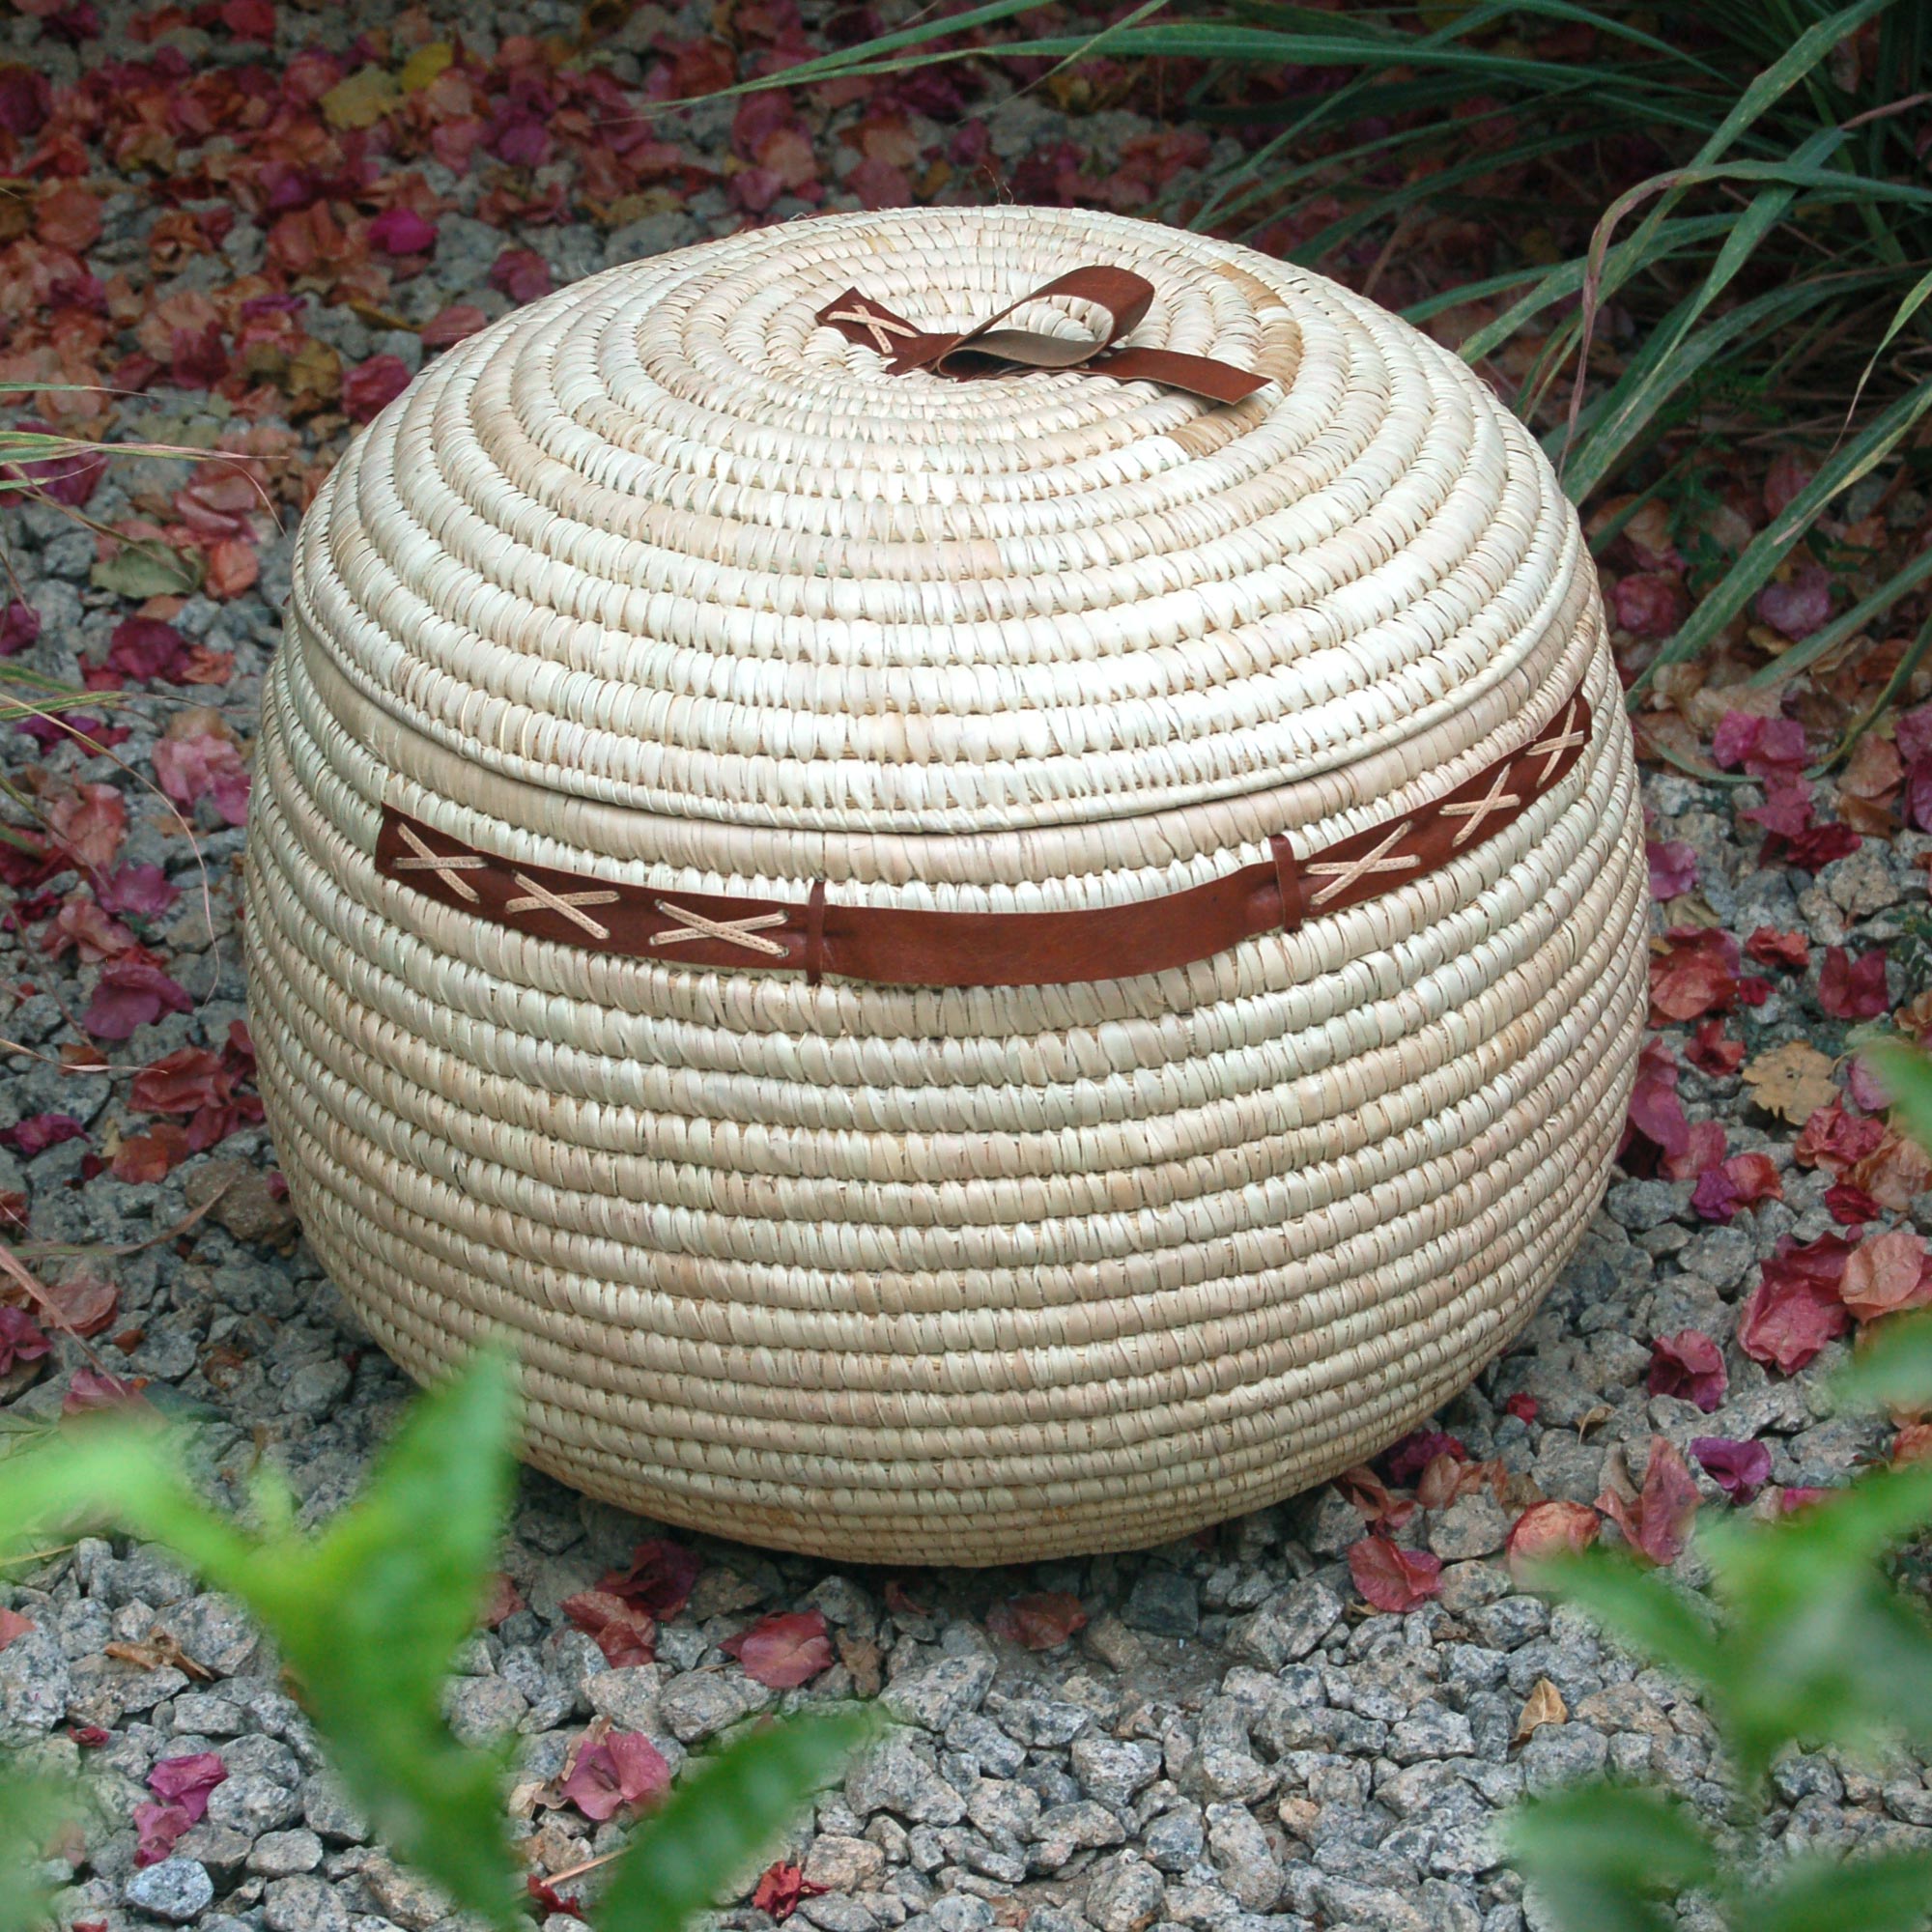 AfriMod Natural #3: Classic Cross-Stitch – Large Lidded Storage Basket